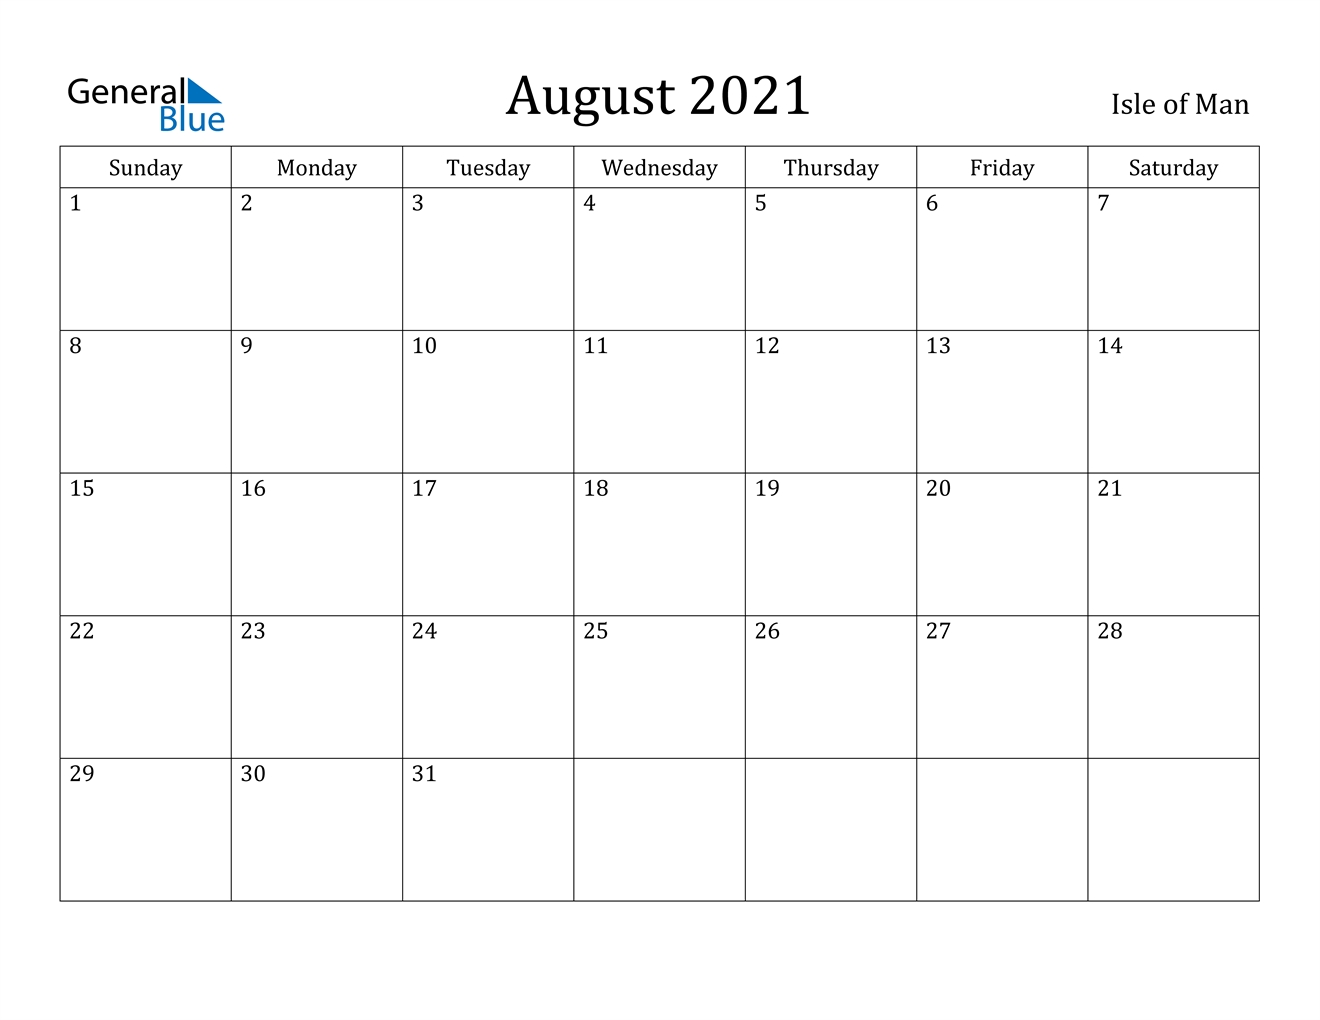 August 2021 Calendar - Isle Of Man-August 2021 Calendar Monday Friday